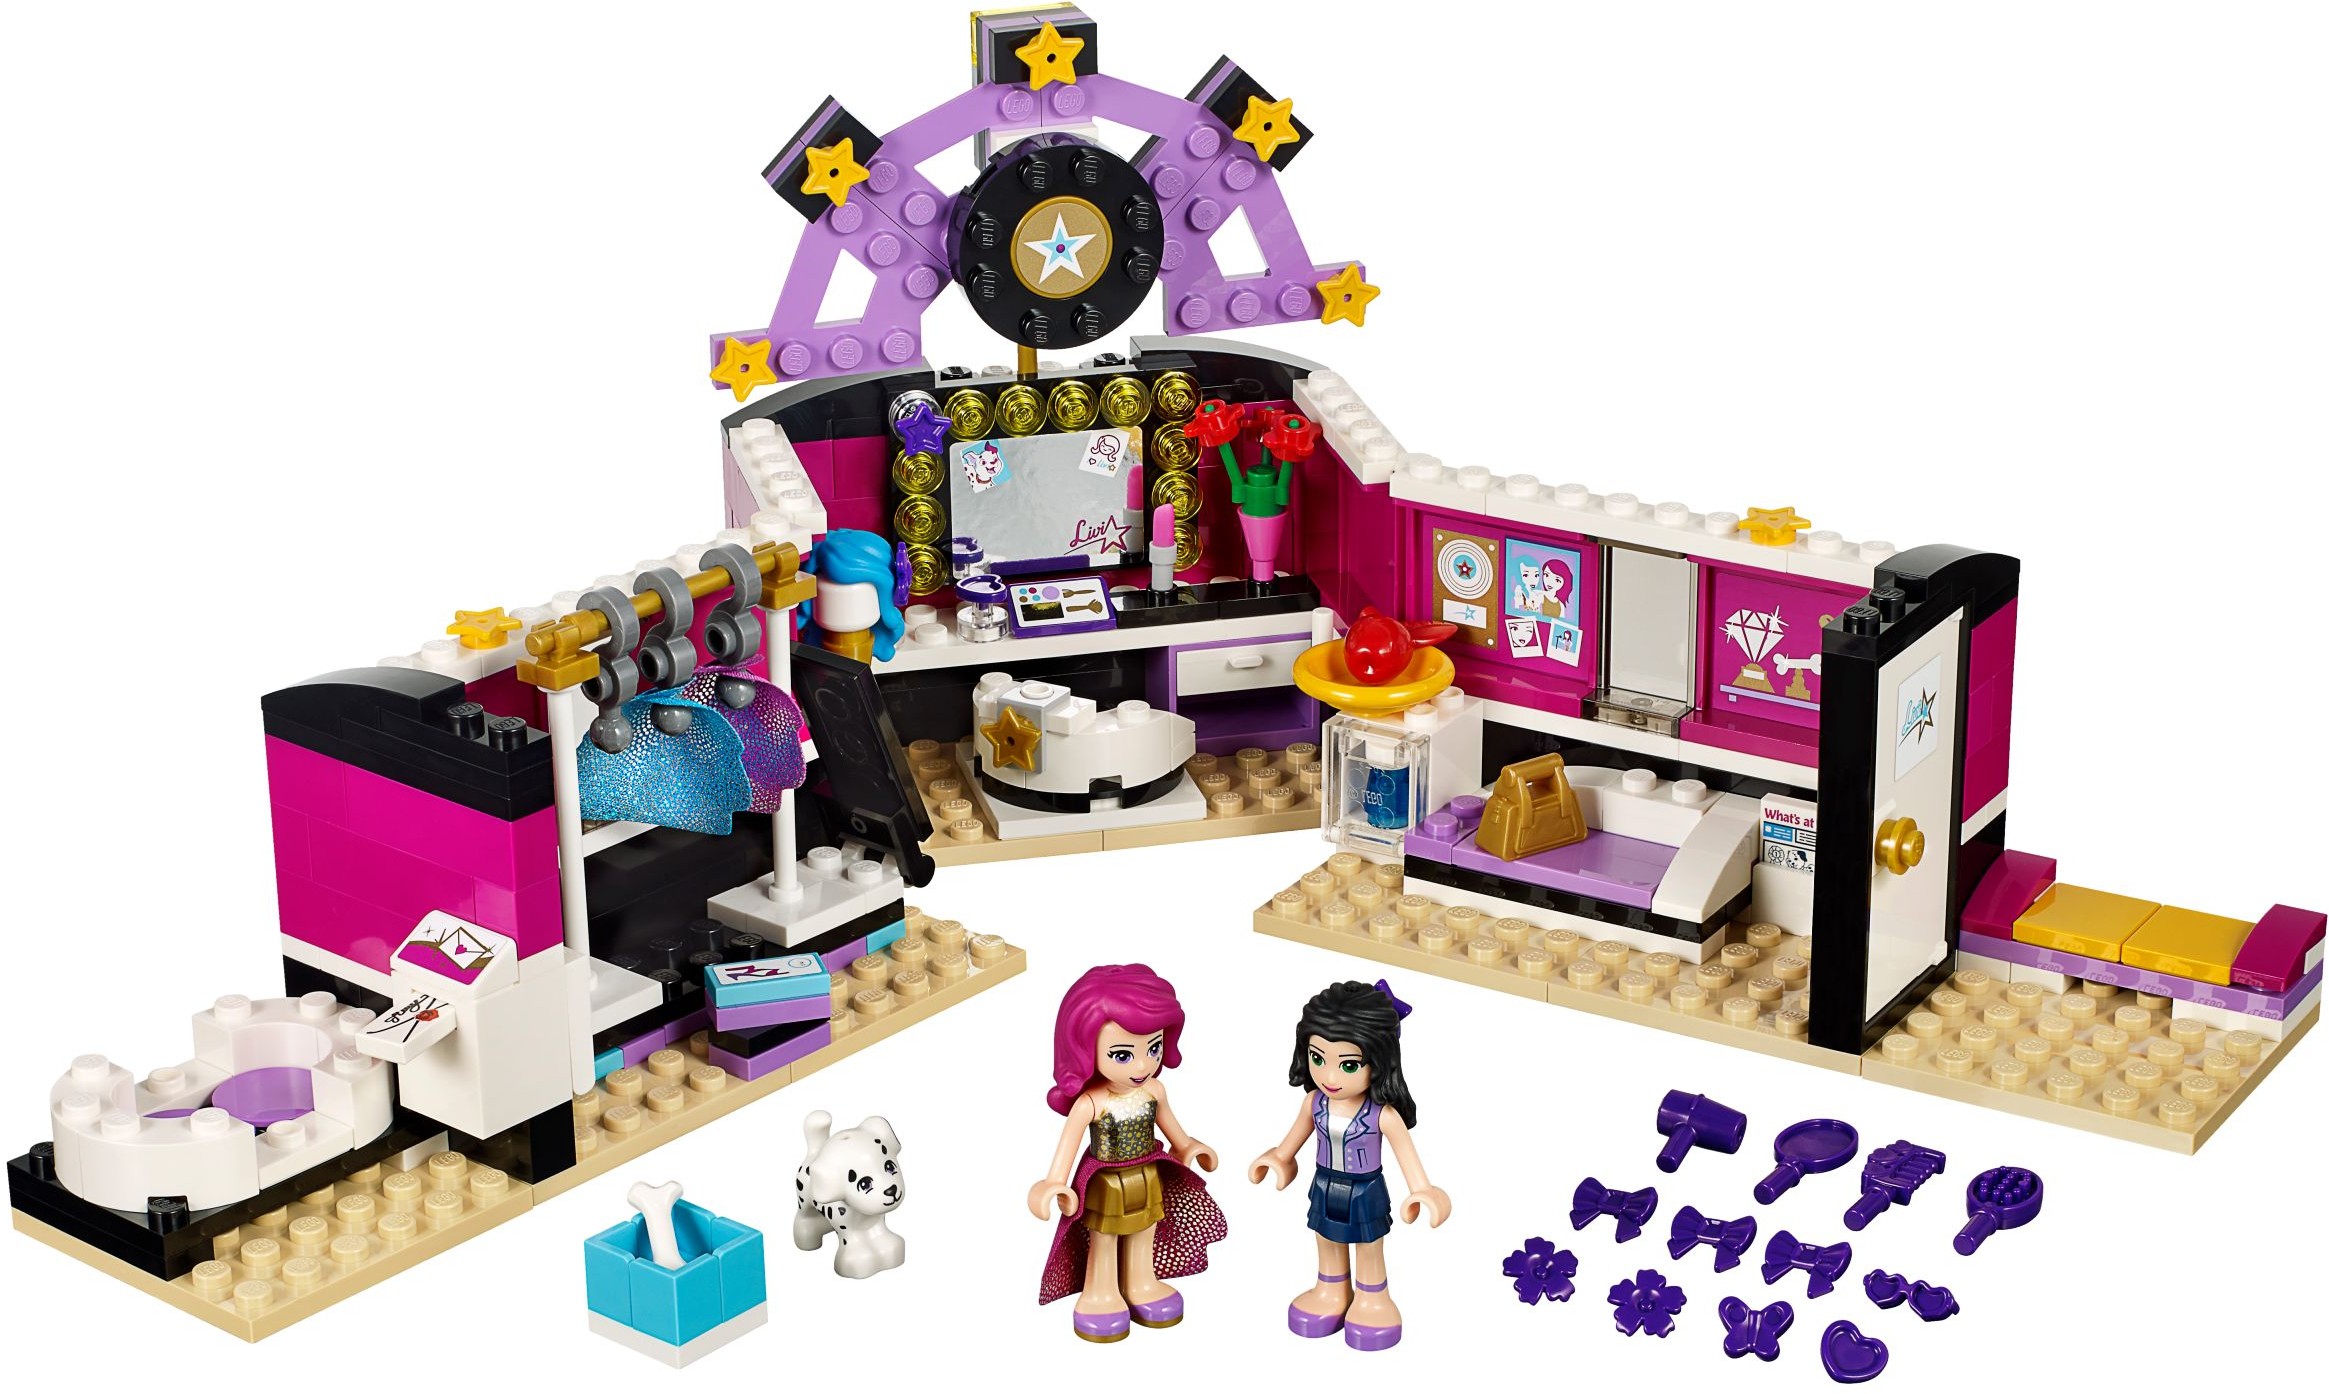 Lego Friends. Pop star dressing room